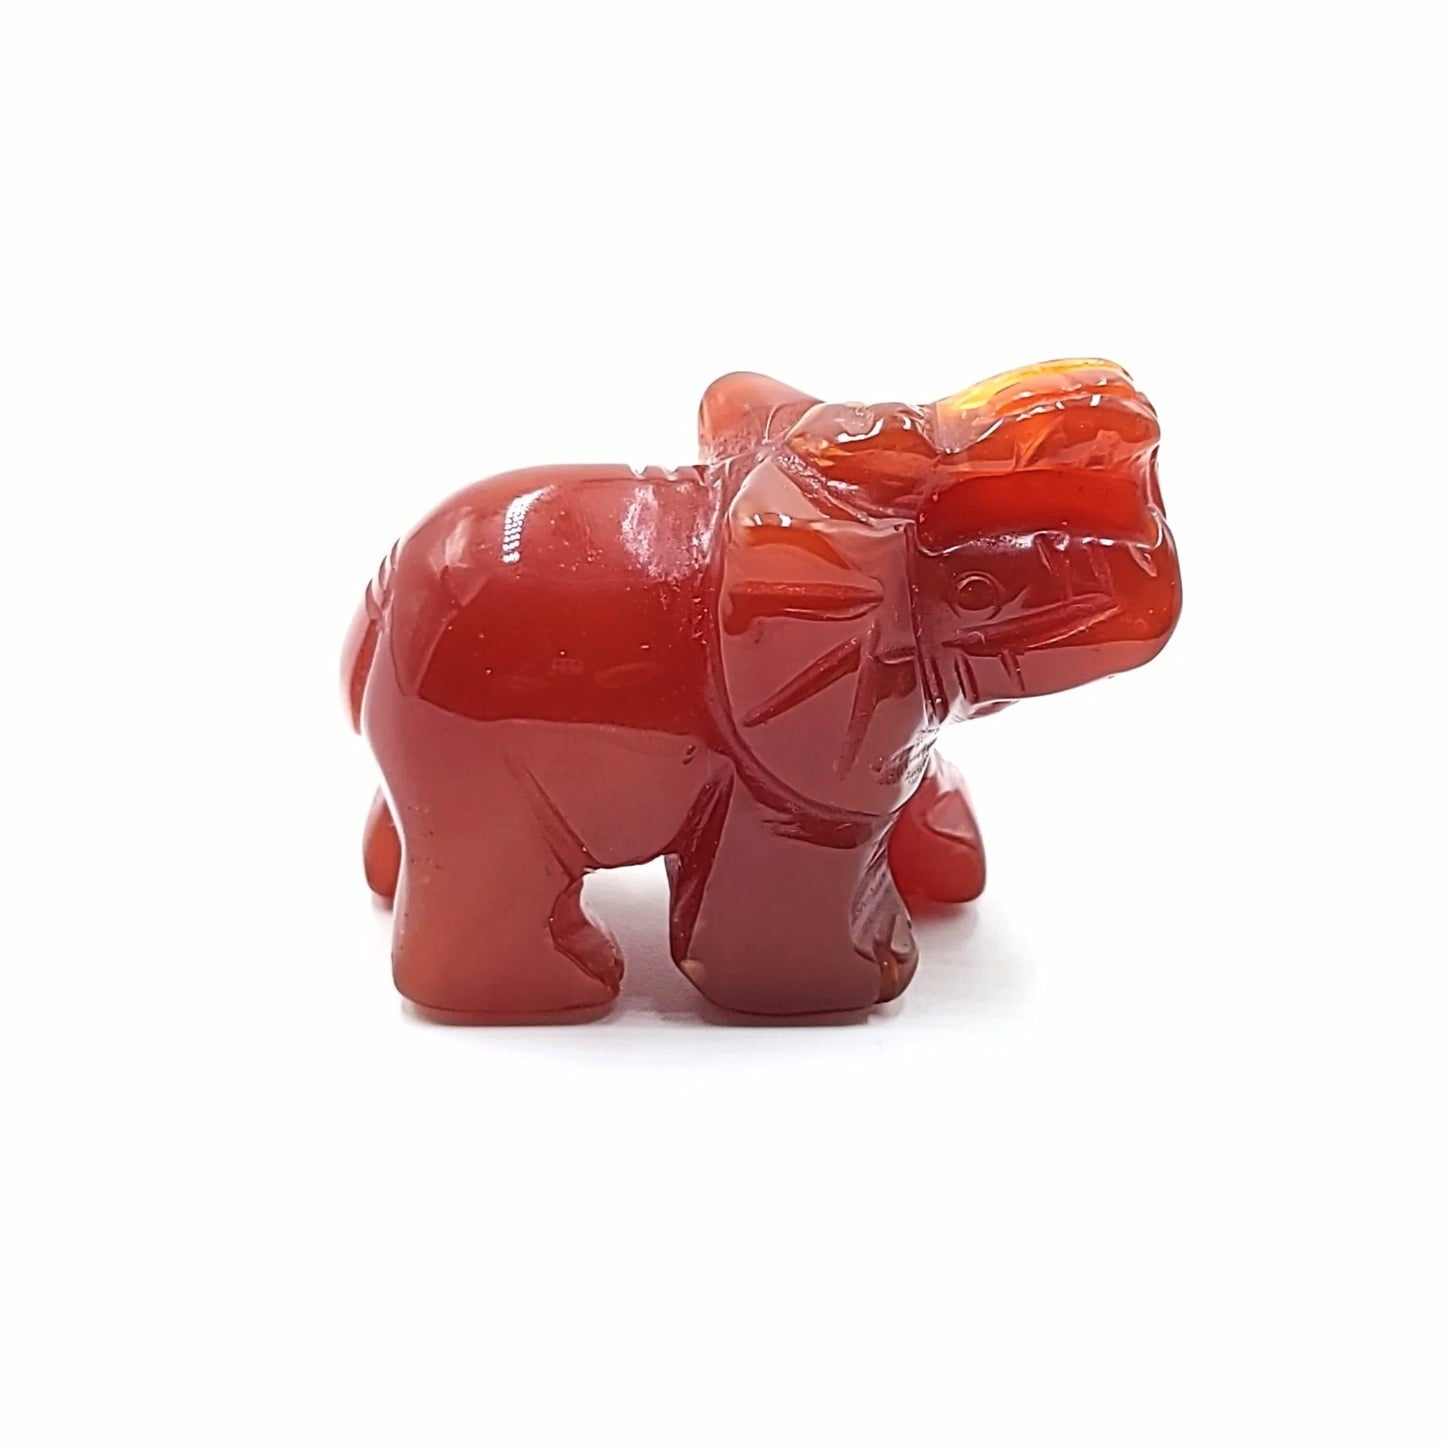 Carnelian Elephant Figurine 2" 50mm - Elevated Metaphysical